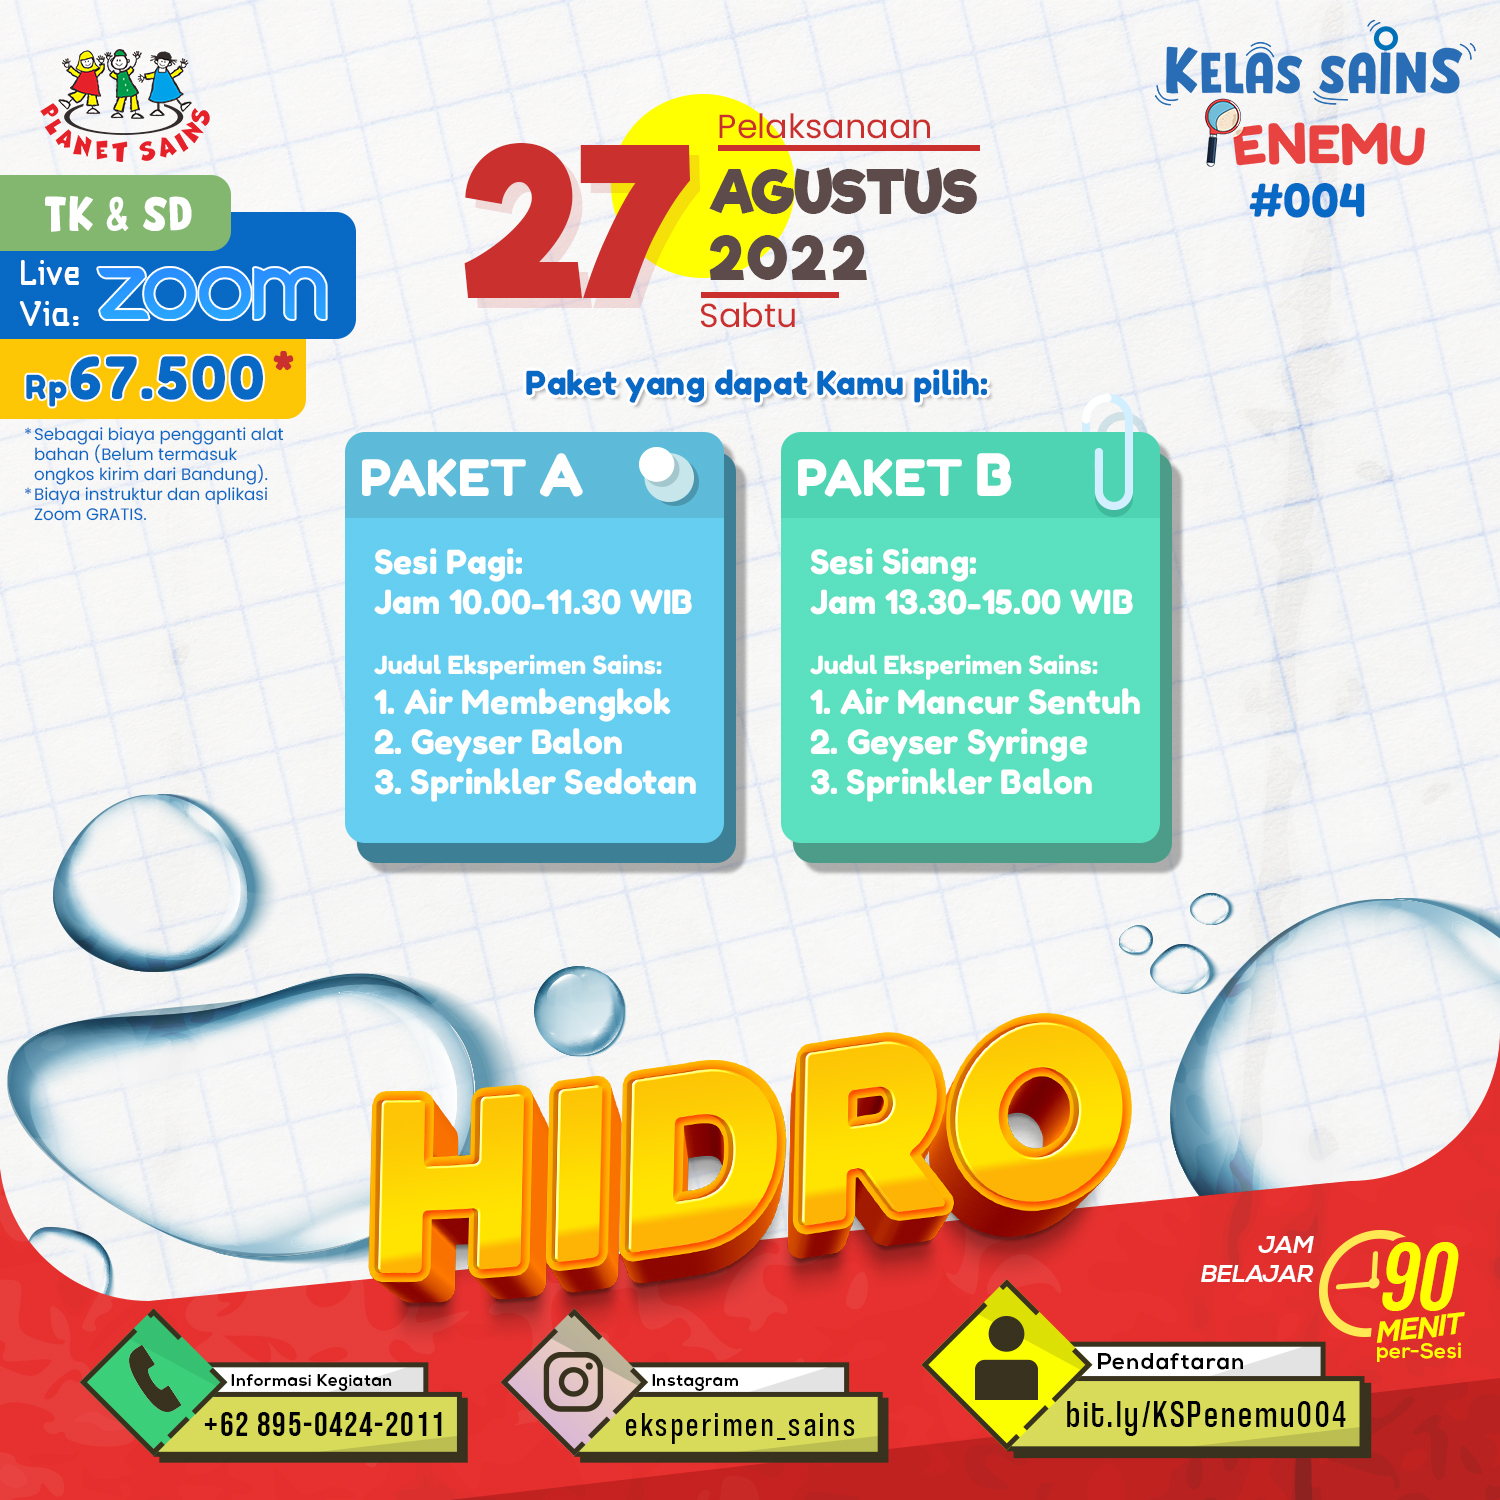 KELAS SAINS PENEMU #004 - HIDRO (27 Agustus 2022)